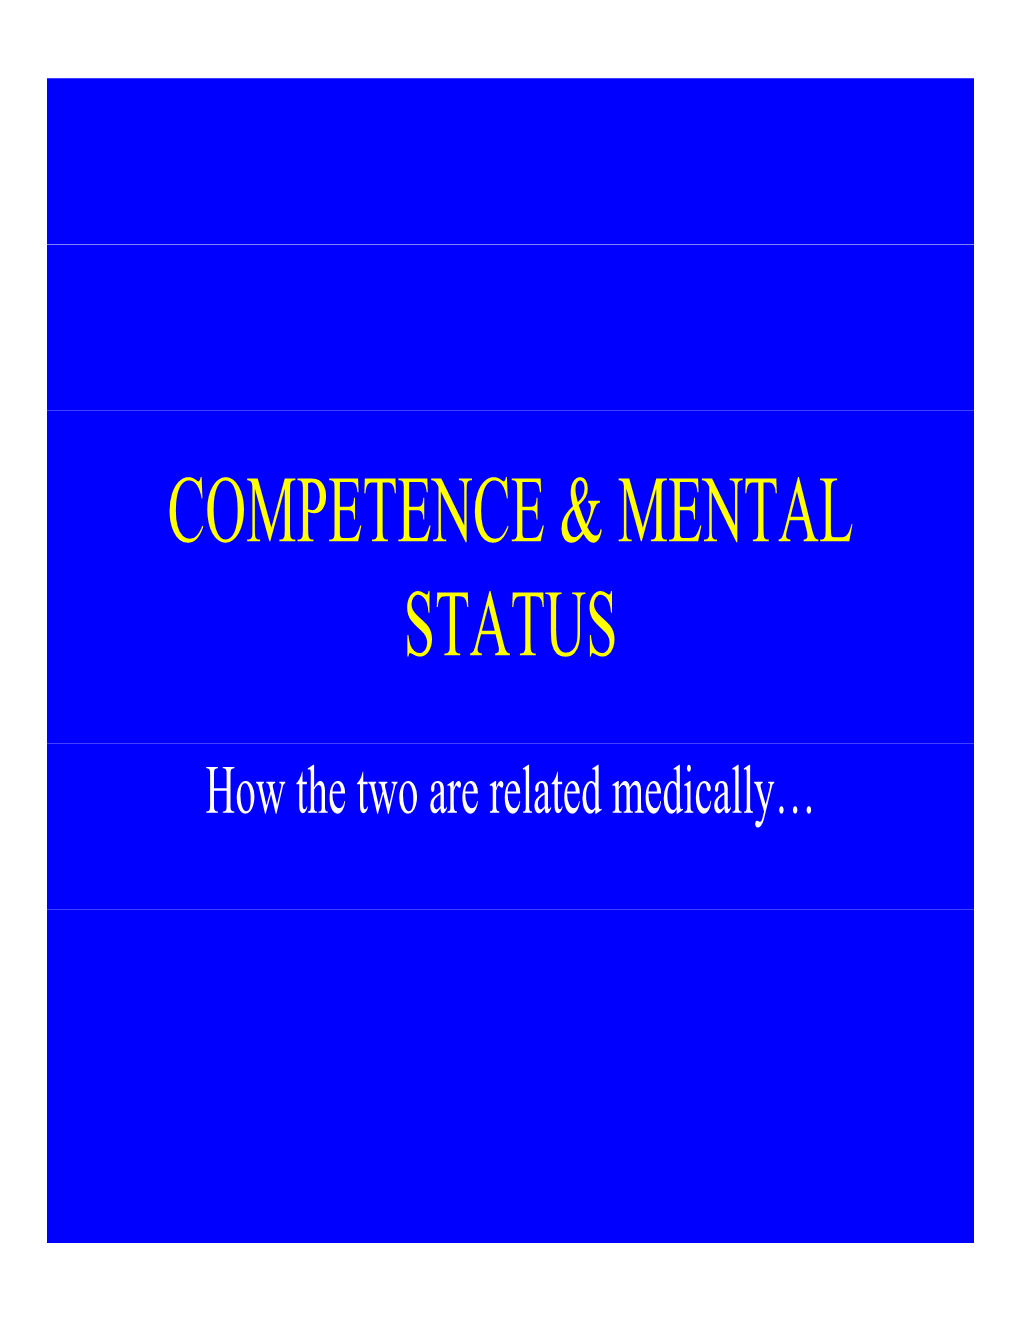 Competence & Mental Status